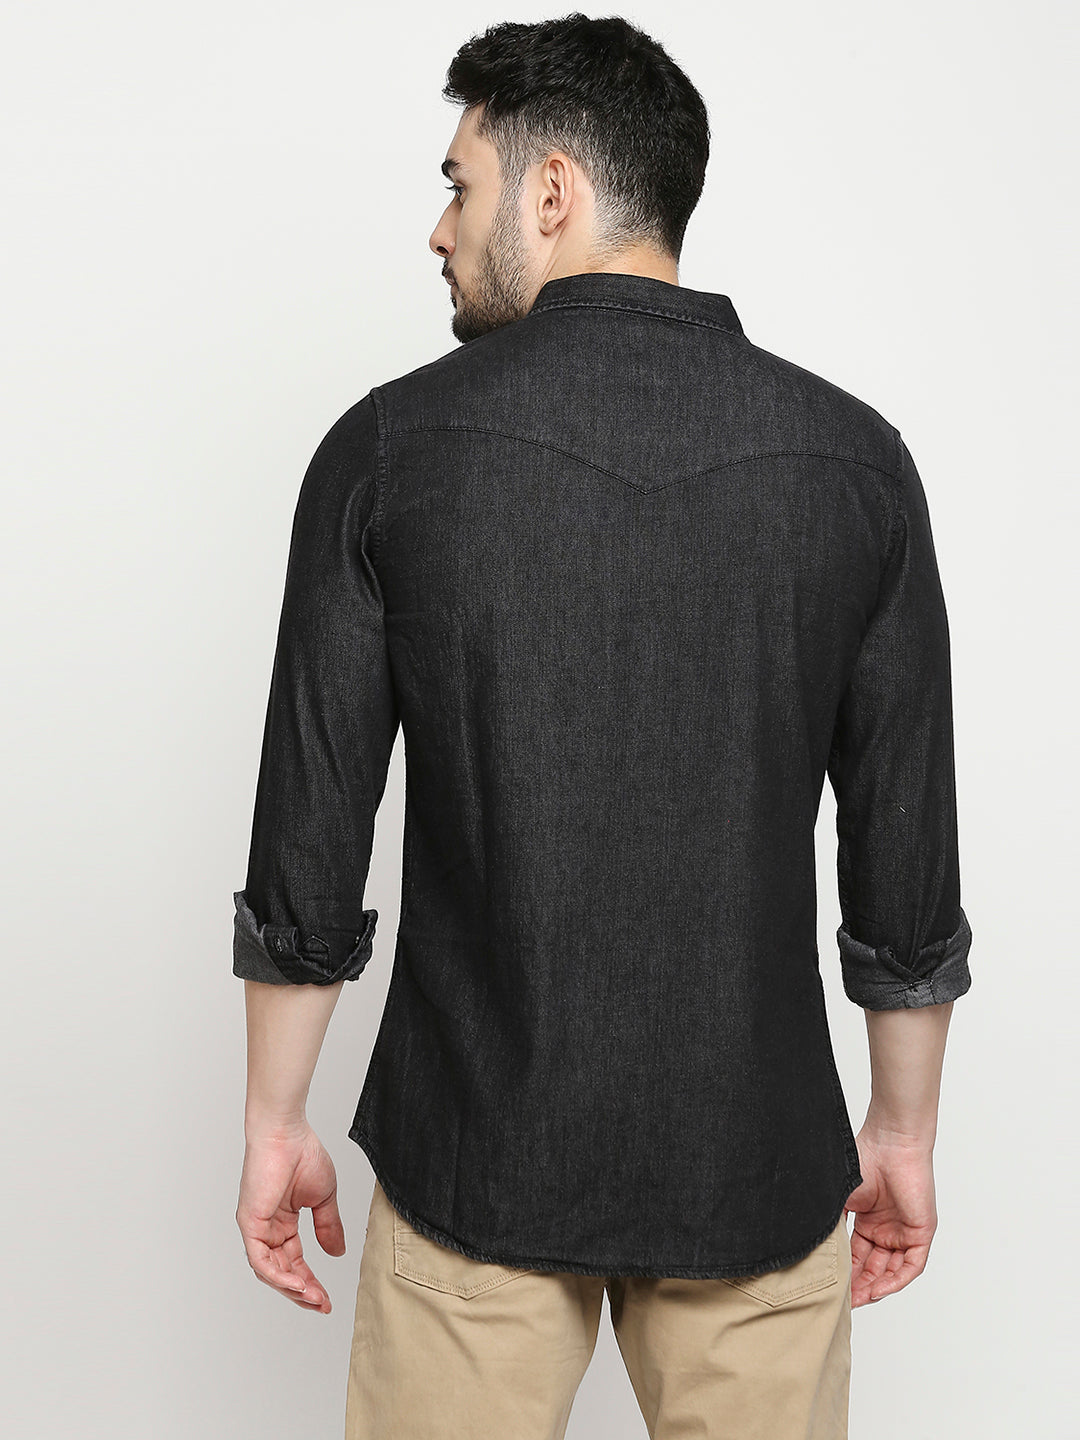 Spykar Washed Black Cotton Full Sleeve Denim Shirt For Men